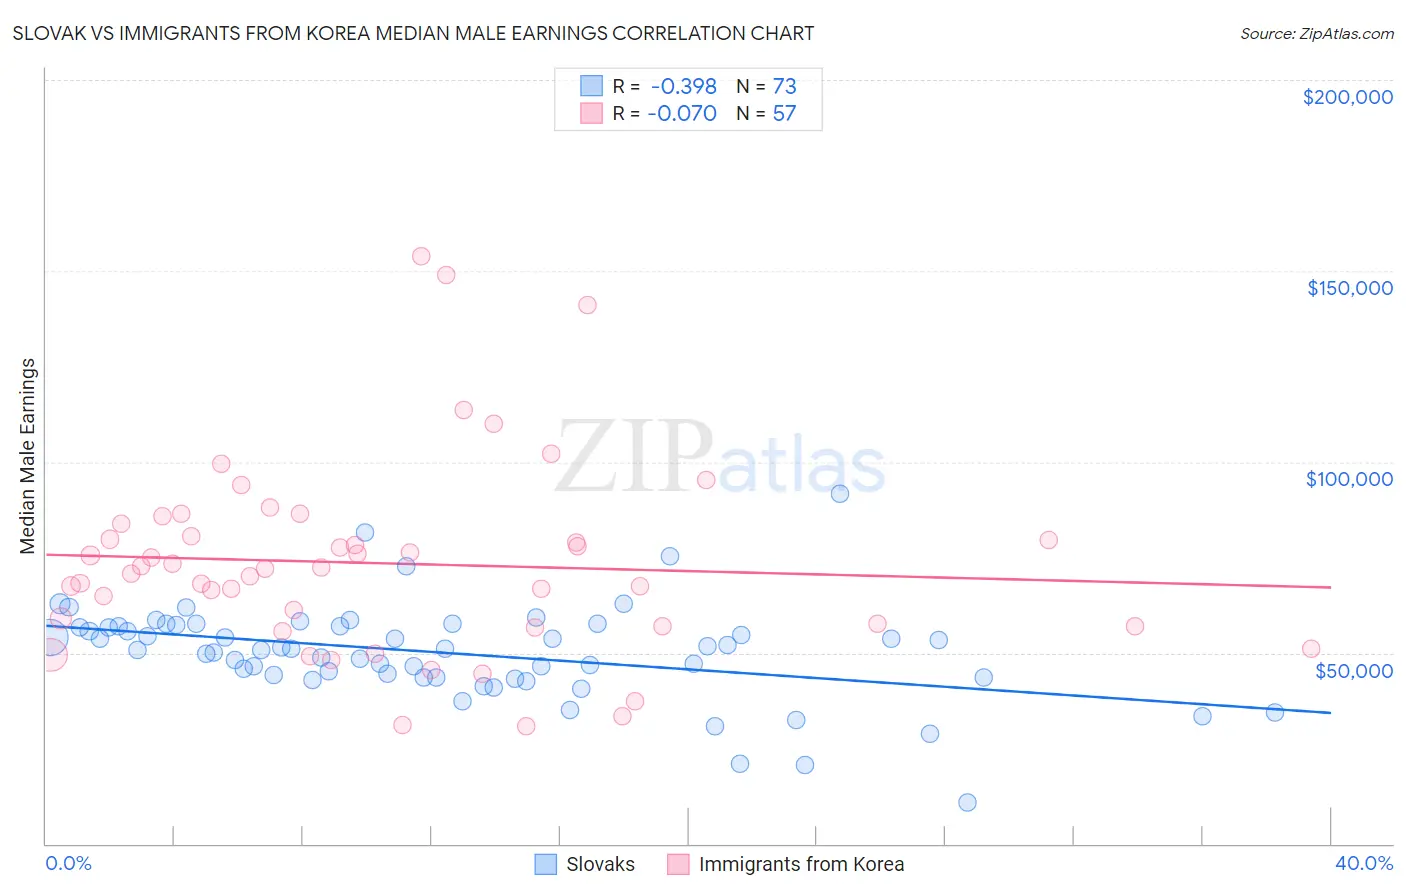 Slovak vs Immigrants from Korea Median Male Earnings